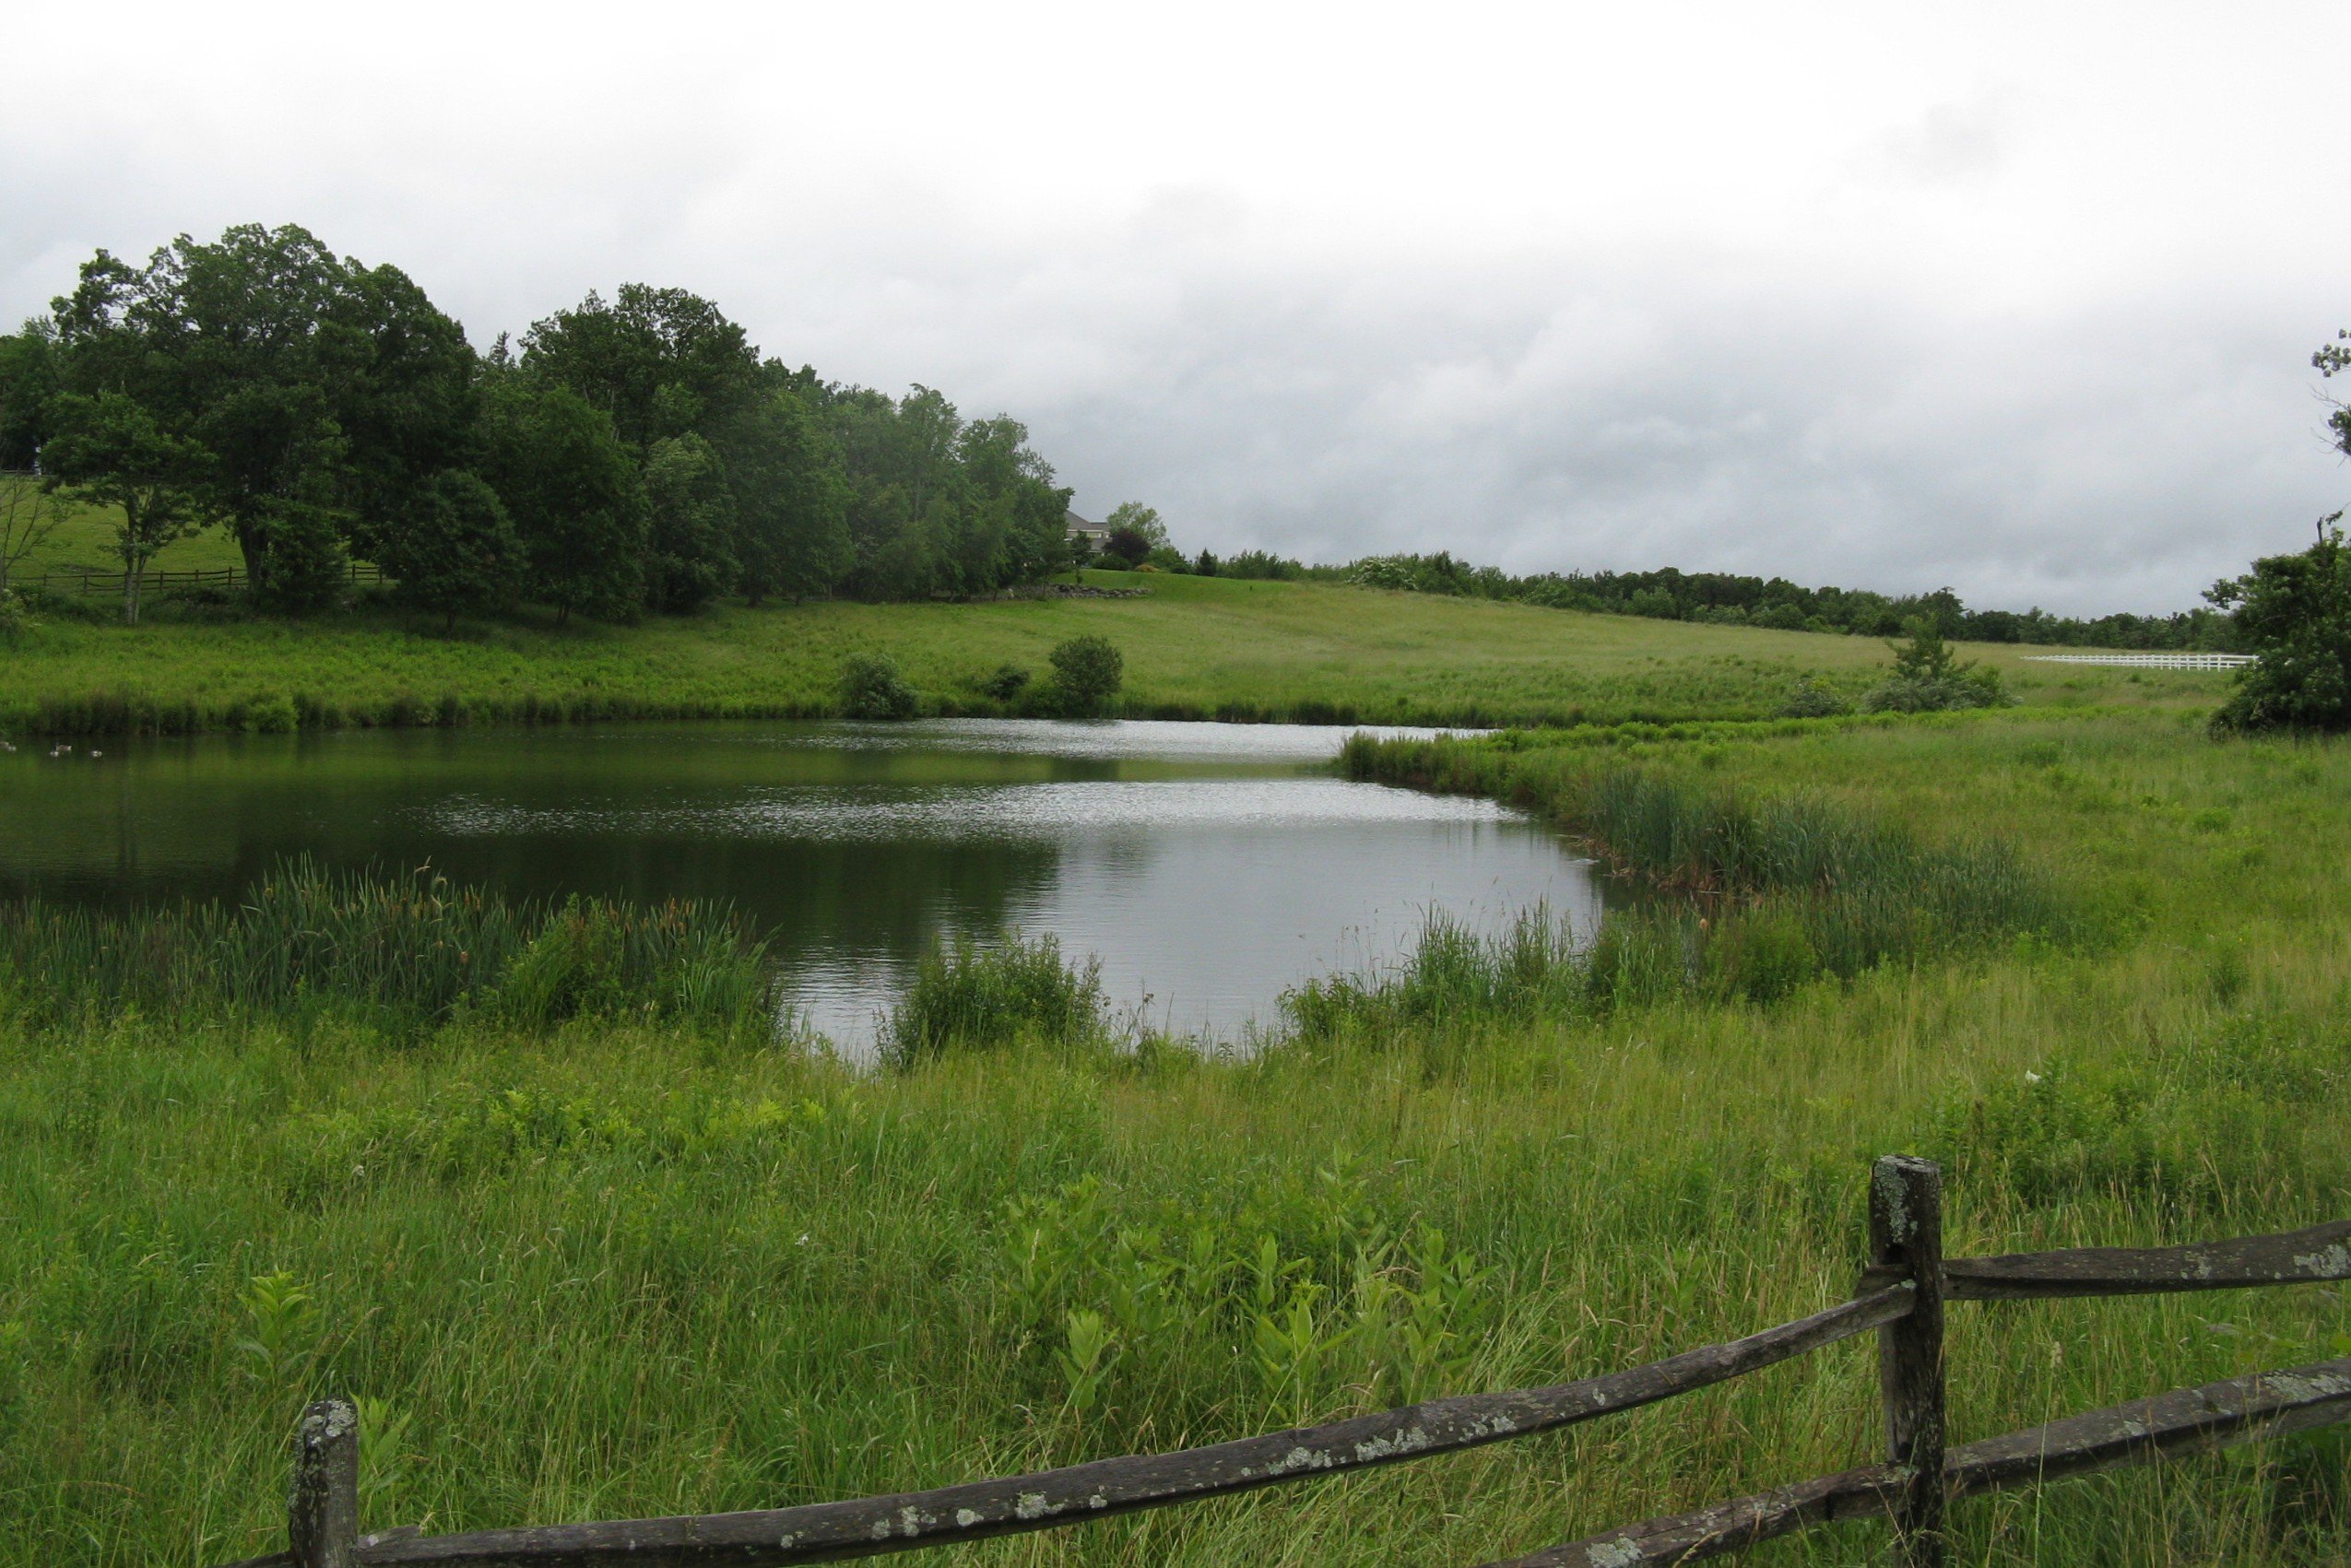 File:Pond off Still River Rd, Still River MA.jpg - Wikimedia Commons